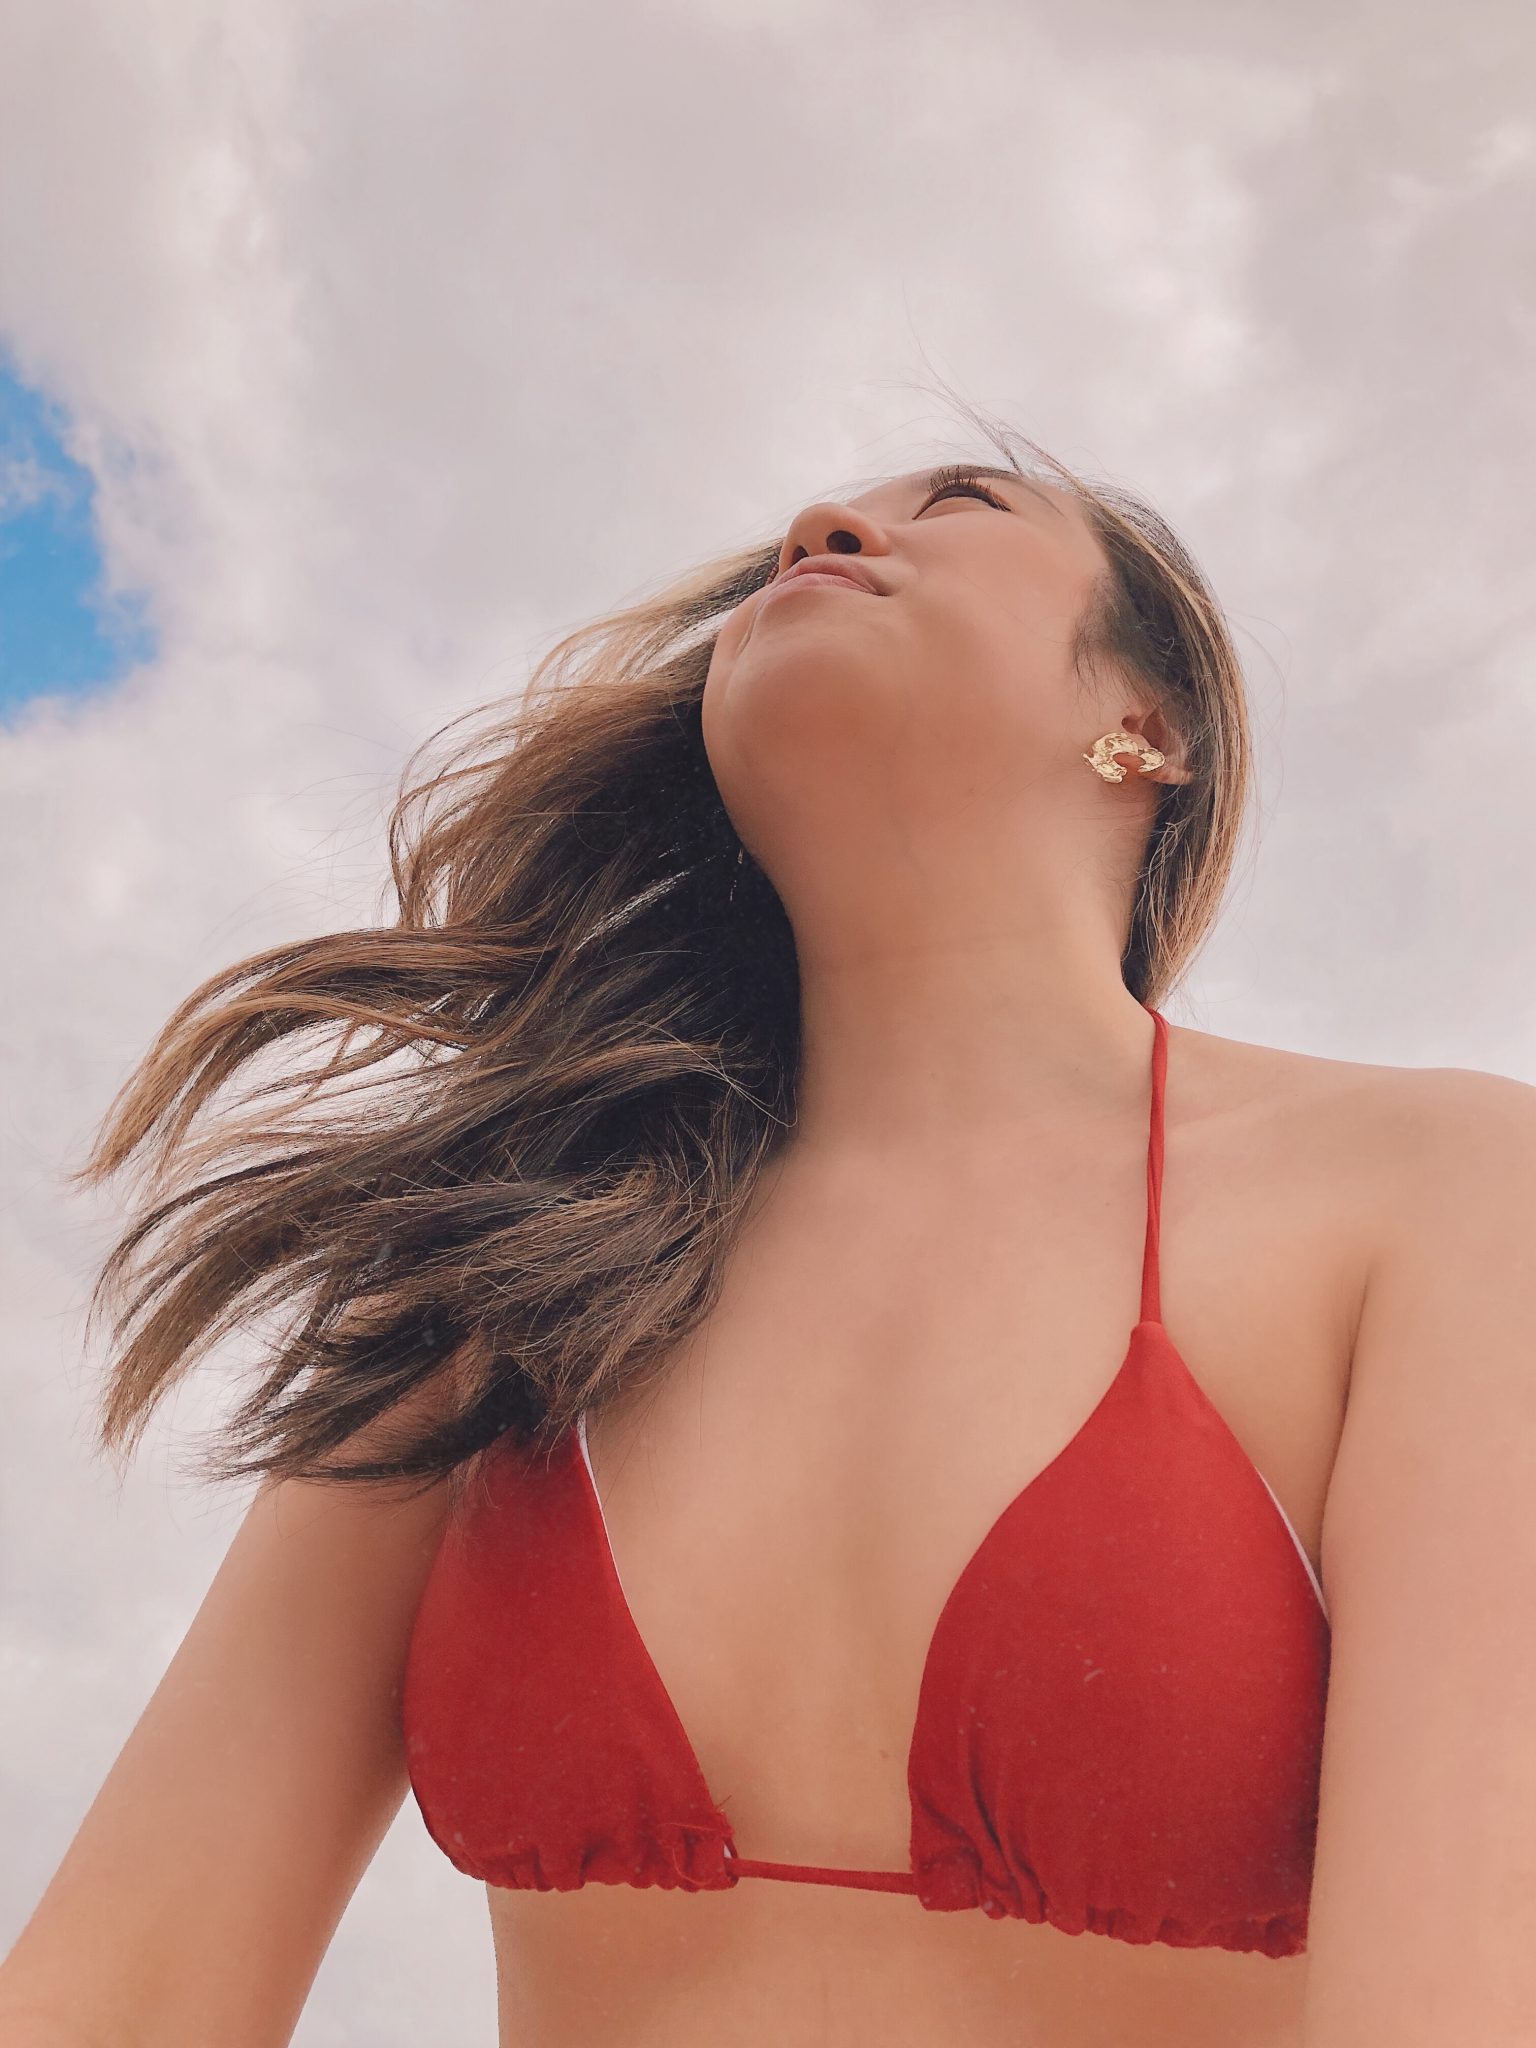 Wearing my classic red bikini on a sunny day